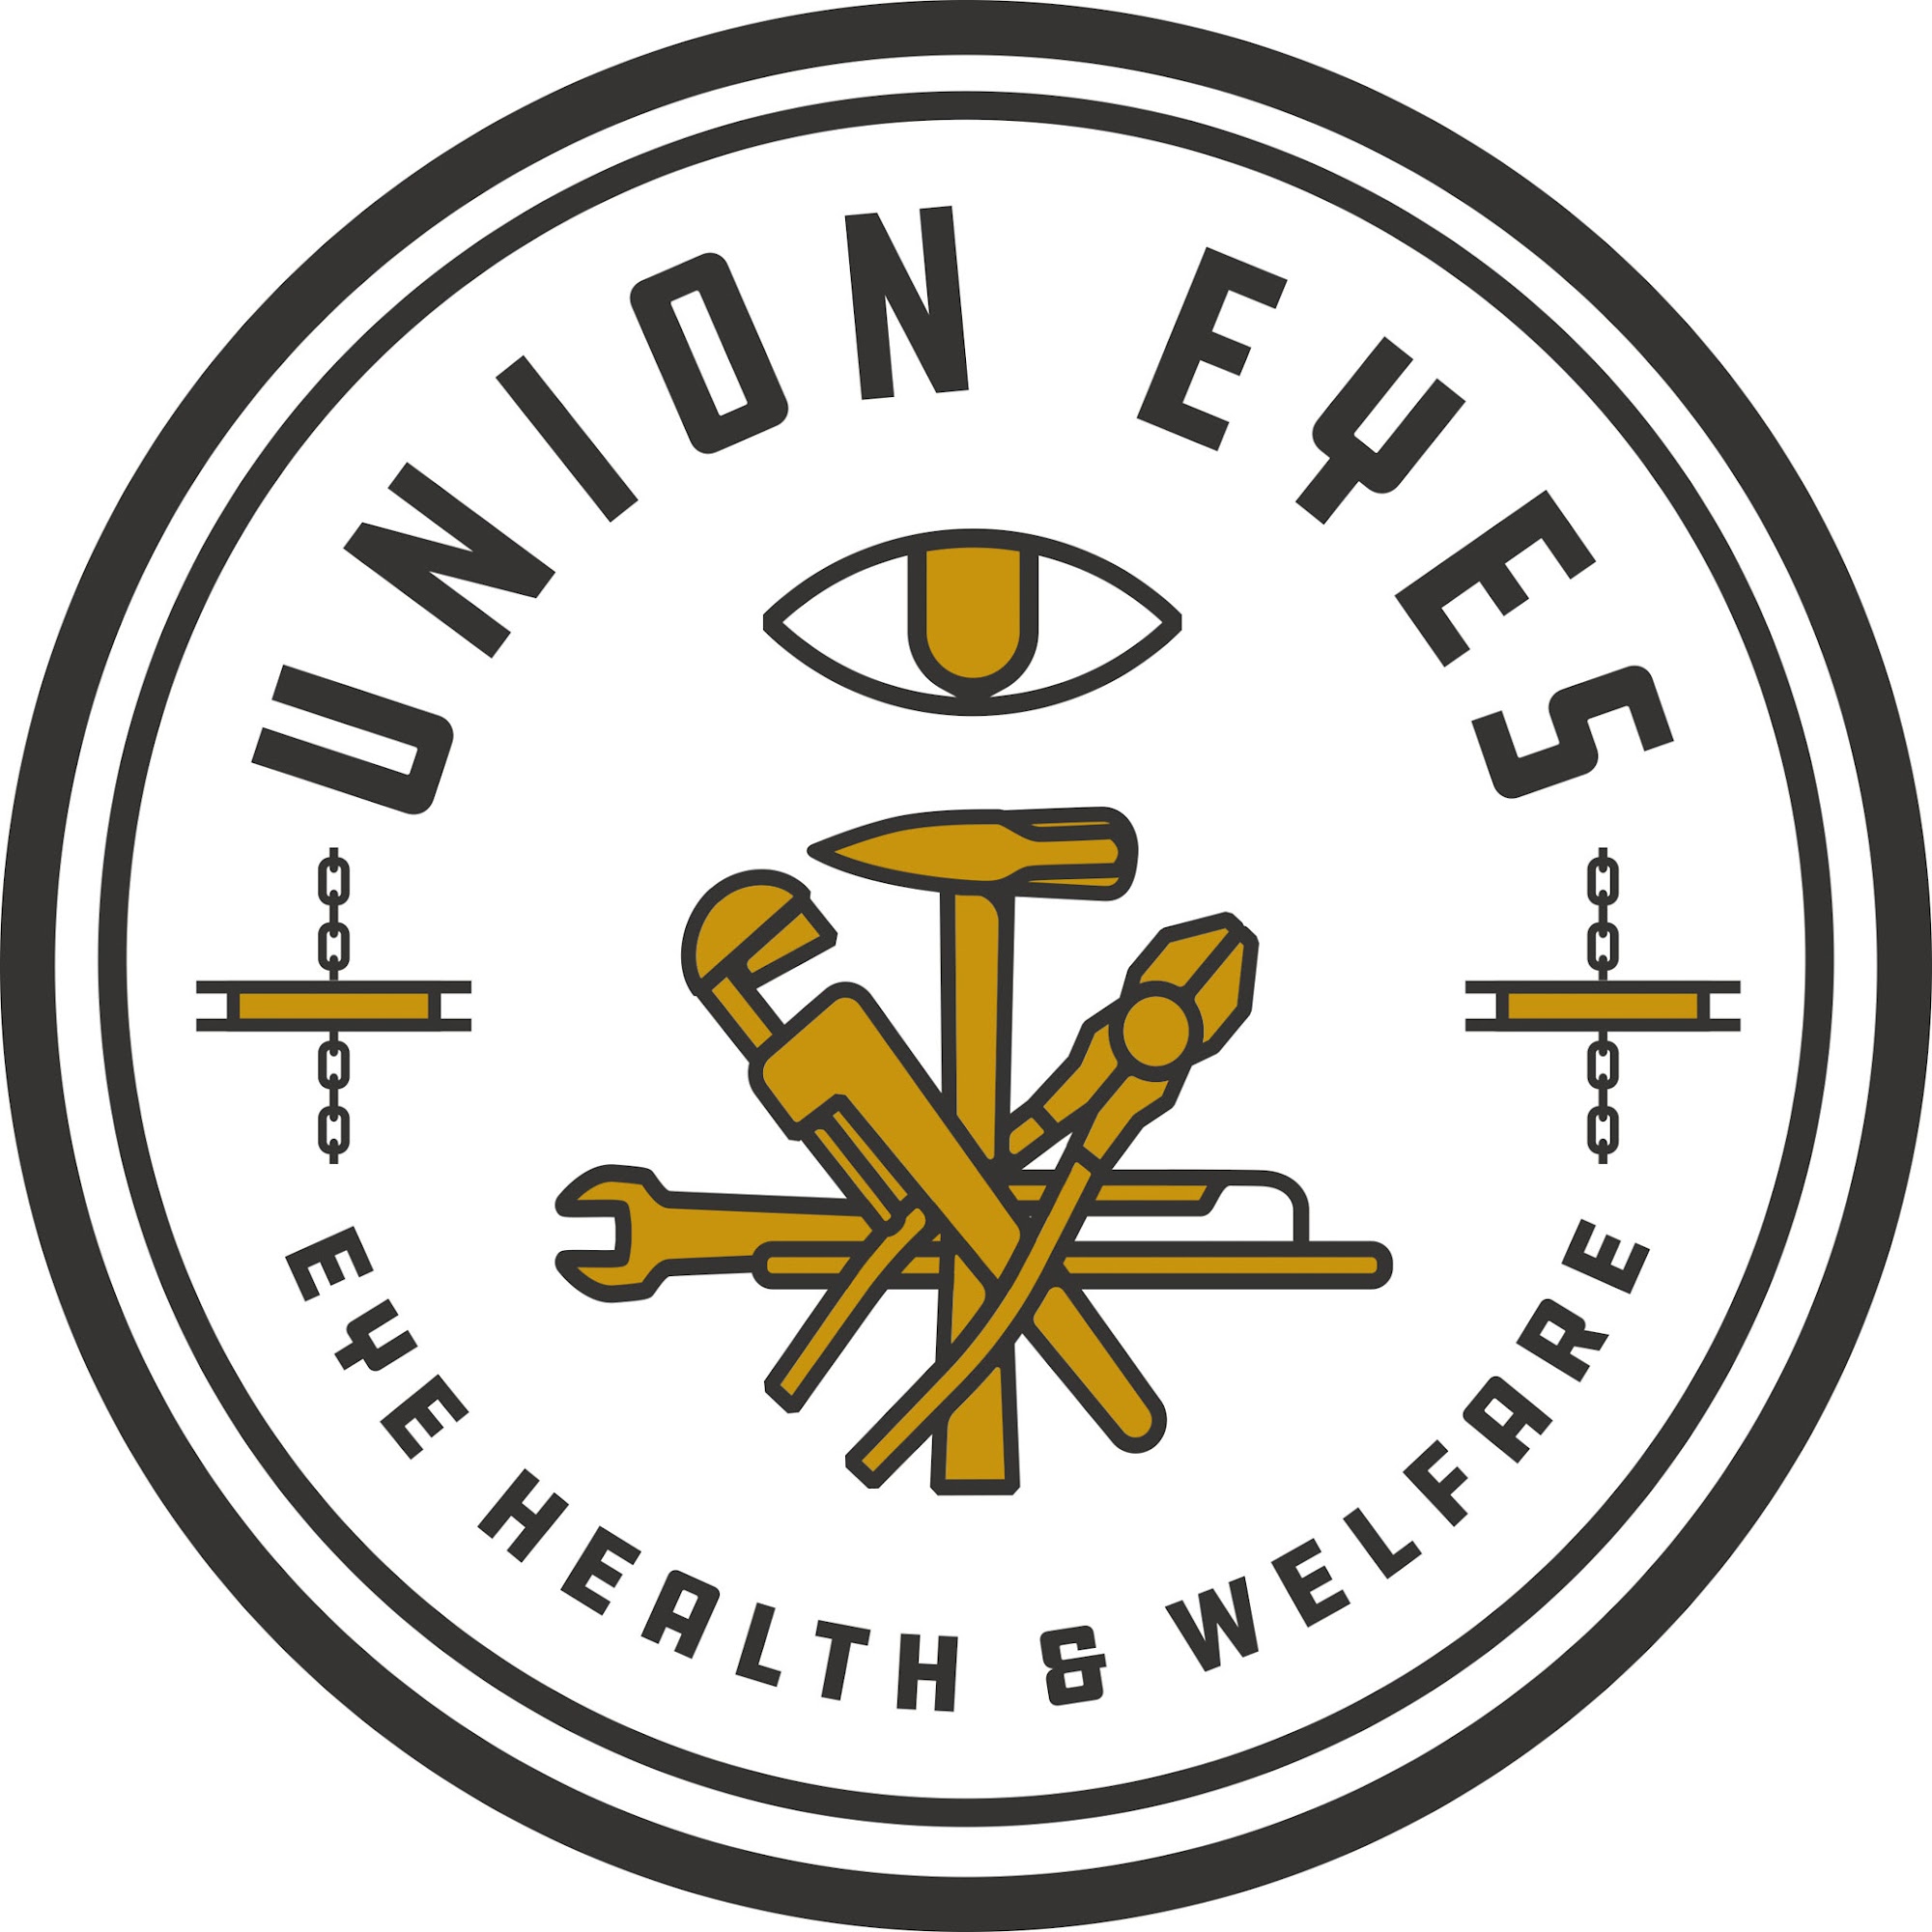 Union Eyes LLC - Crestwood 4738 Cal Sag Rd, Crestwood Illinois 60445